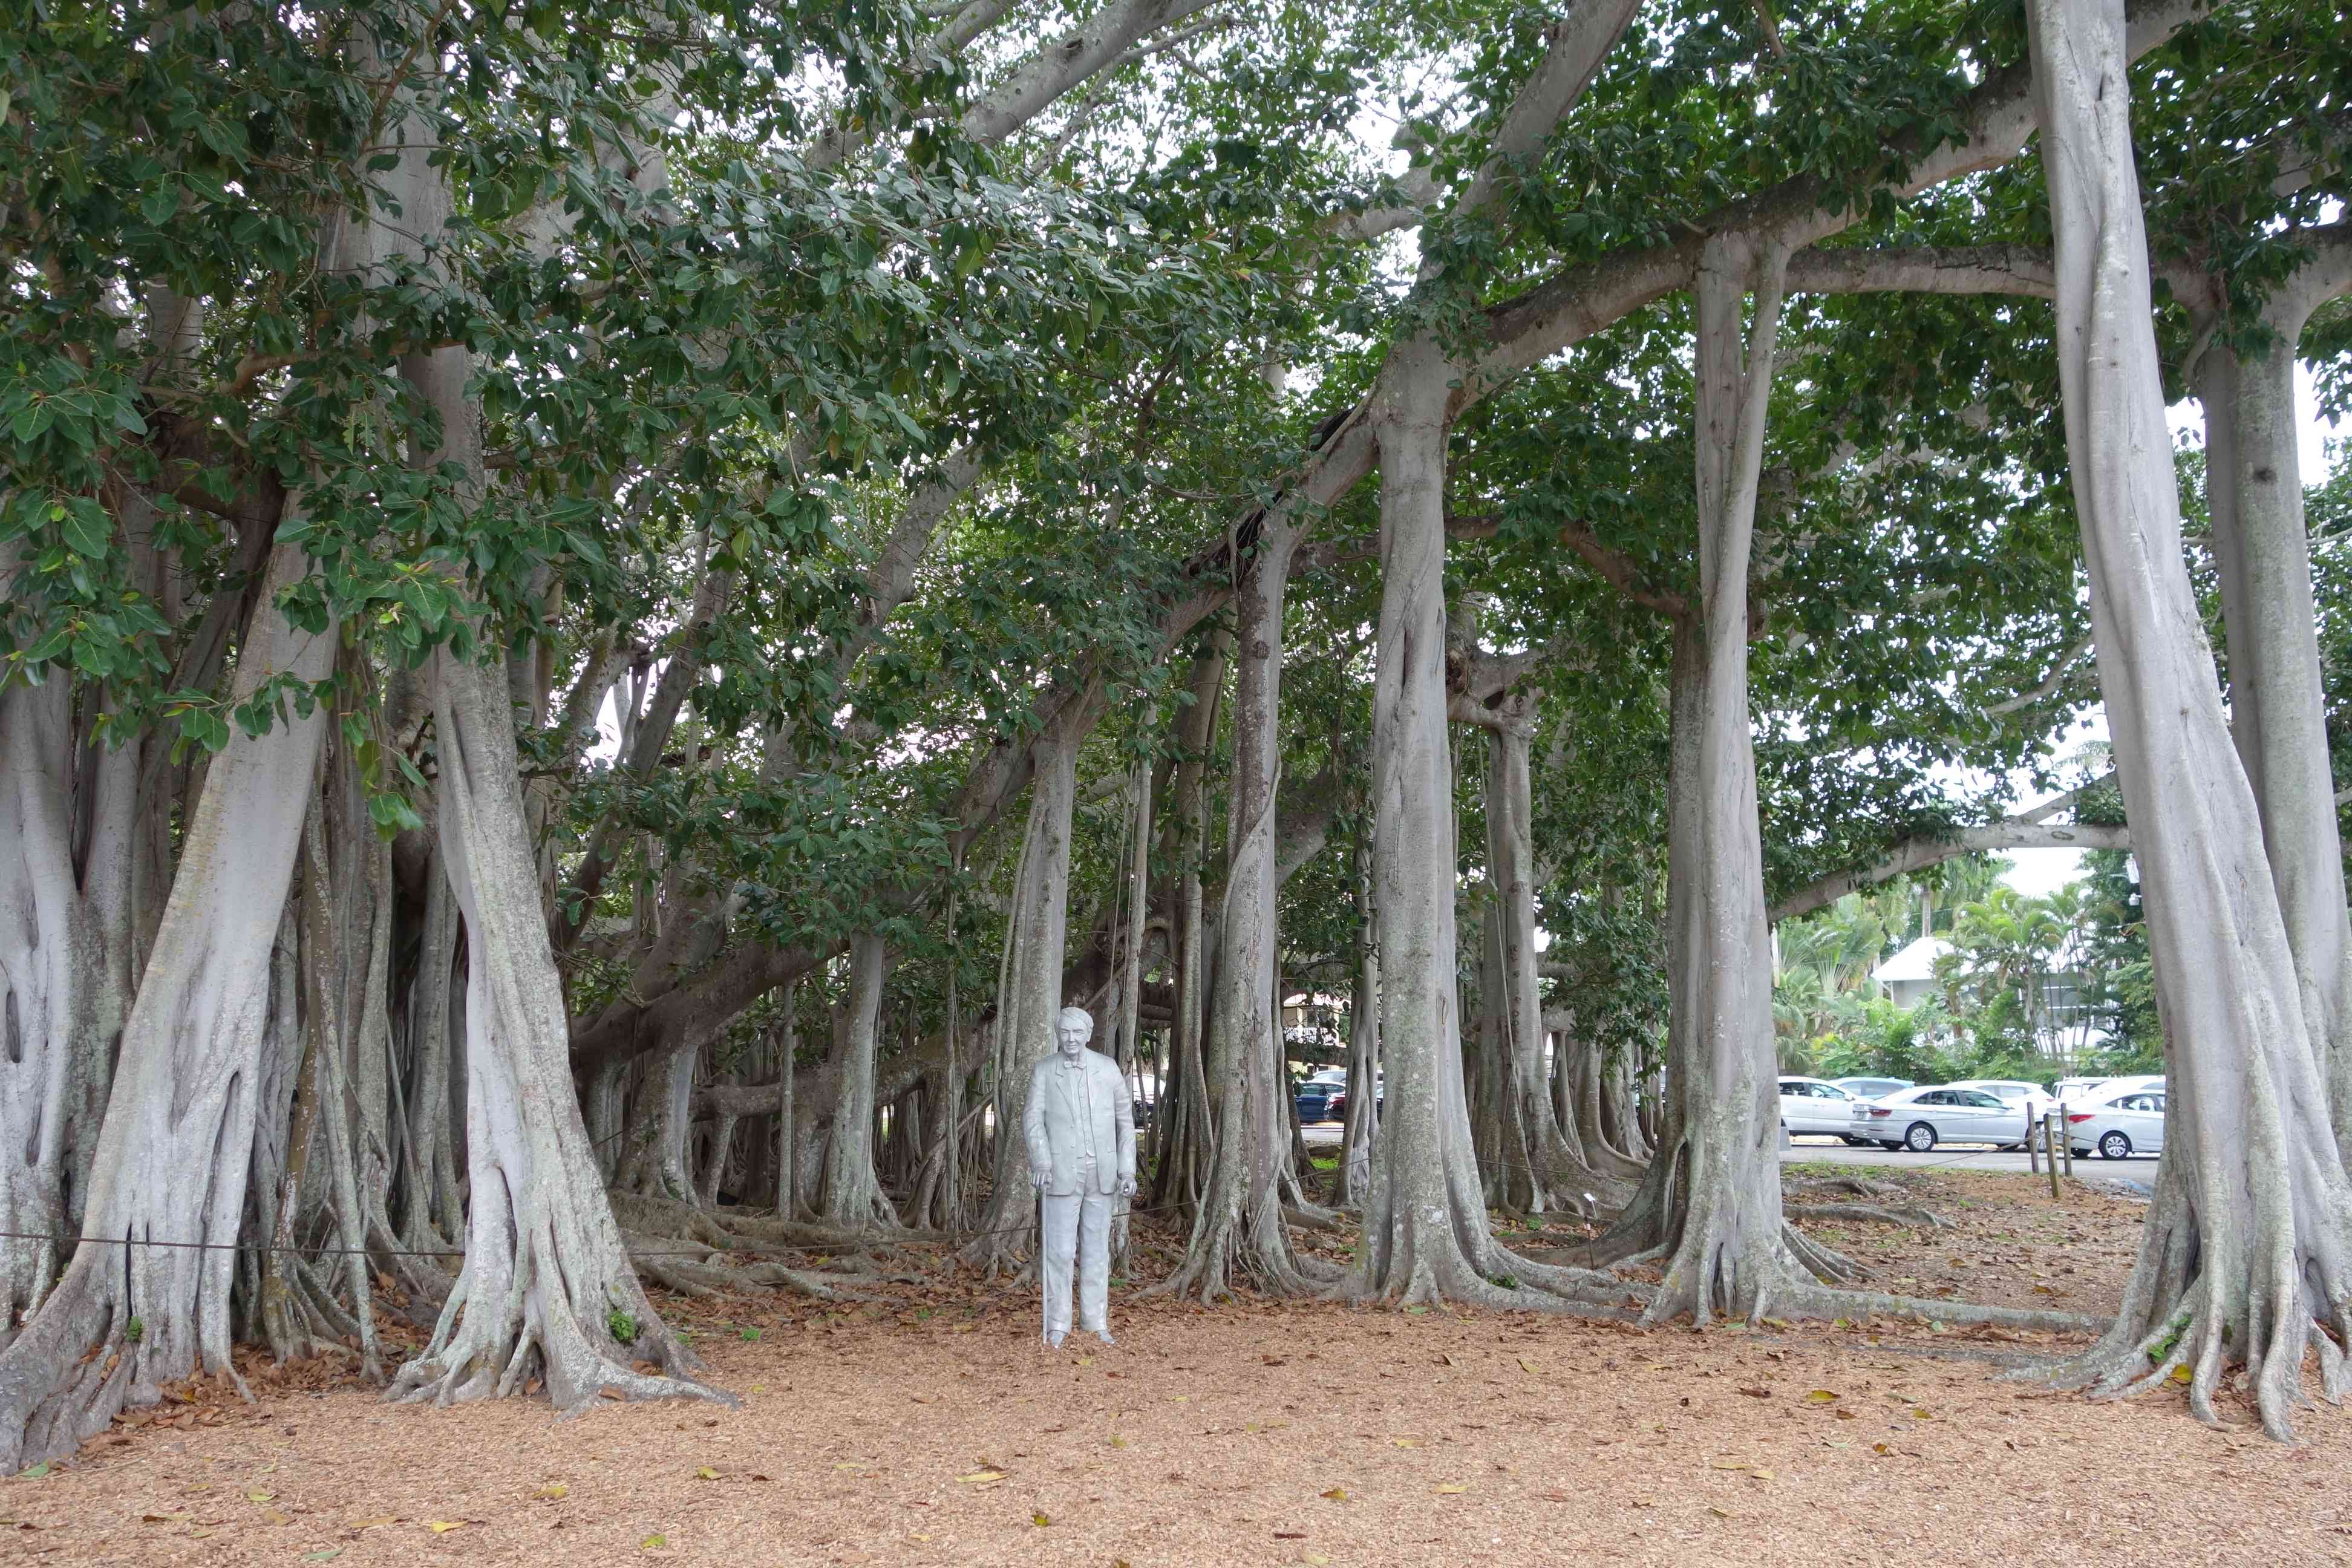 Huge banyan tree in Edison's estate